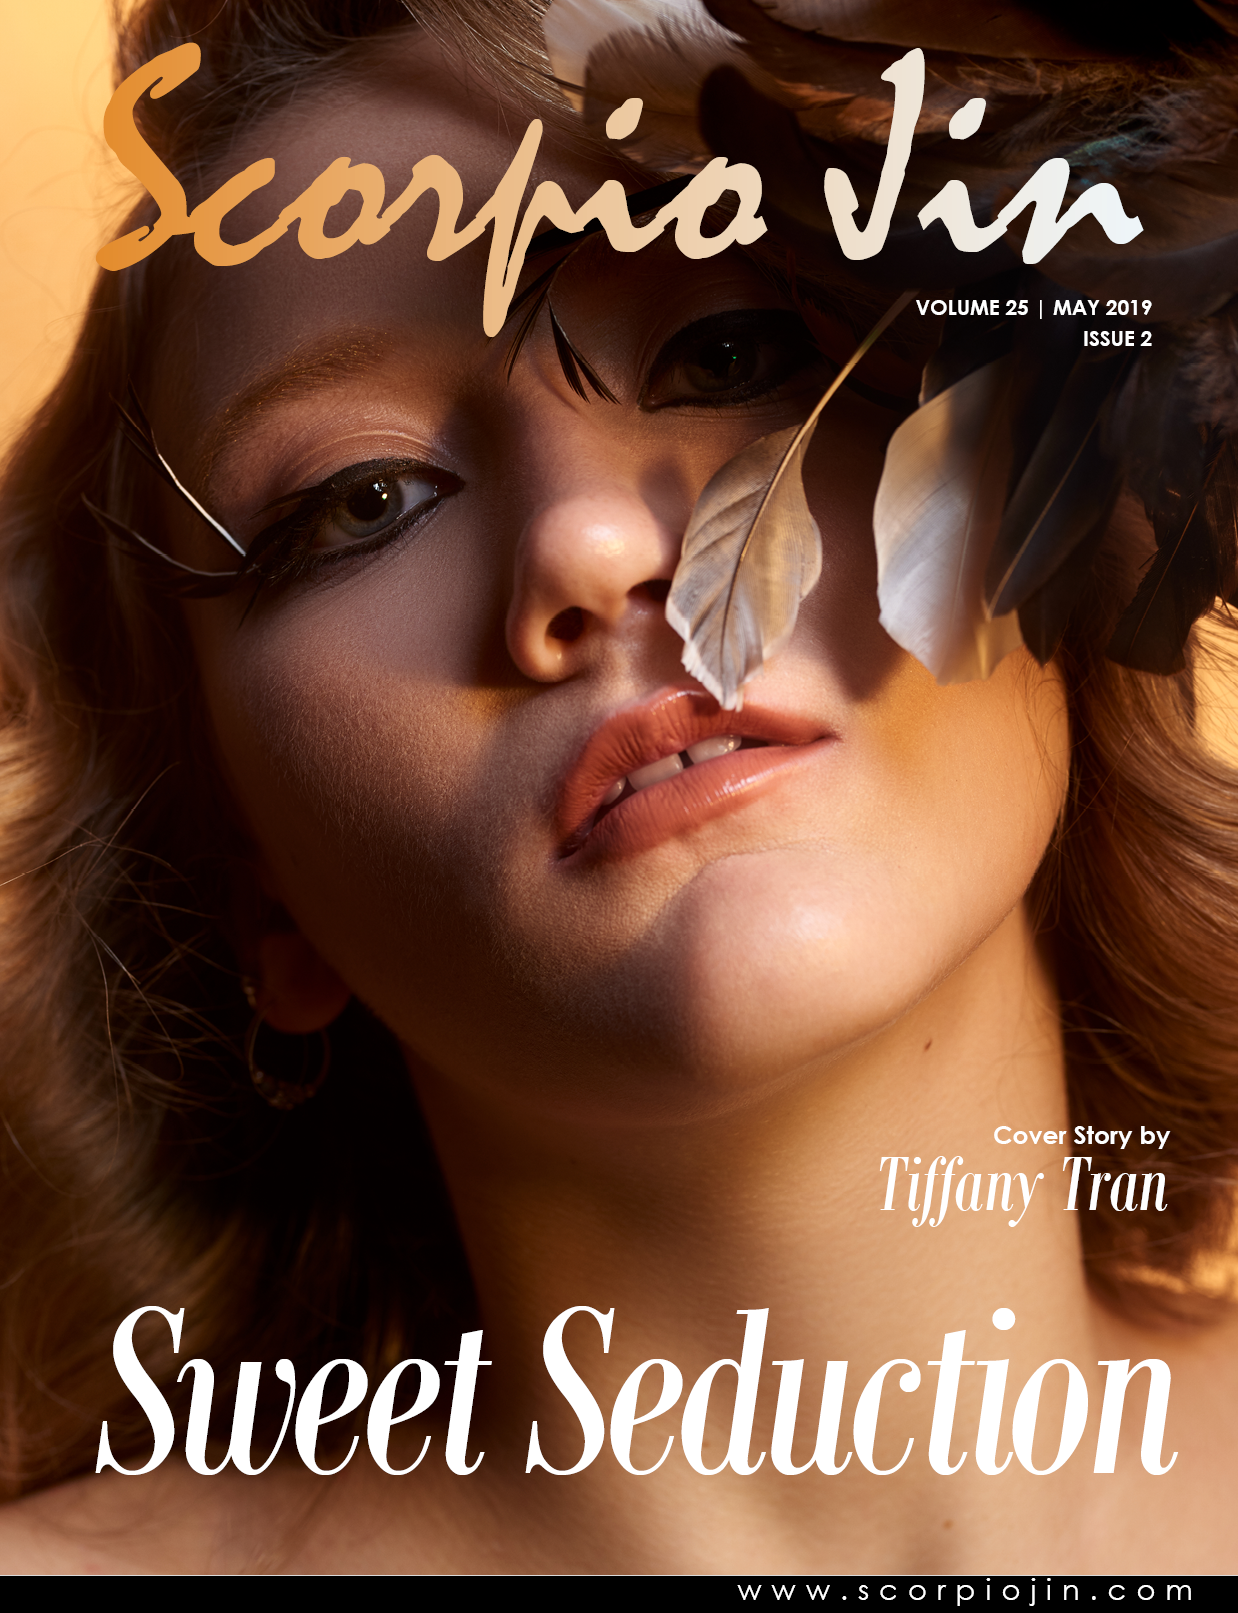 Scorpio Jin Magazine Volume 25_2_Her Seduction.png